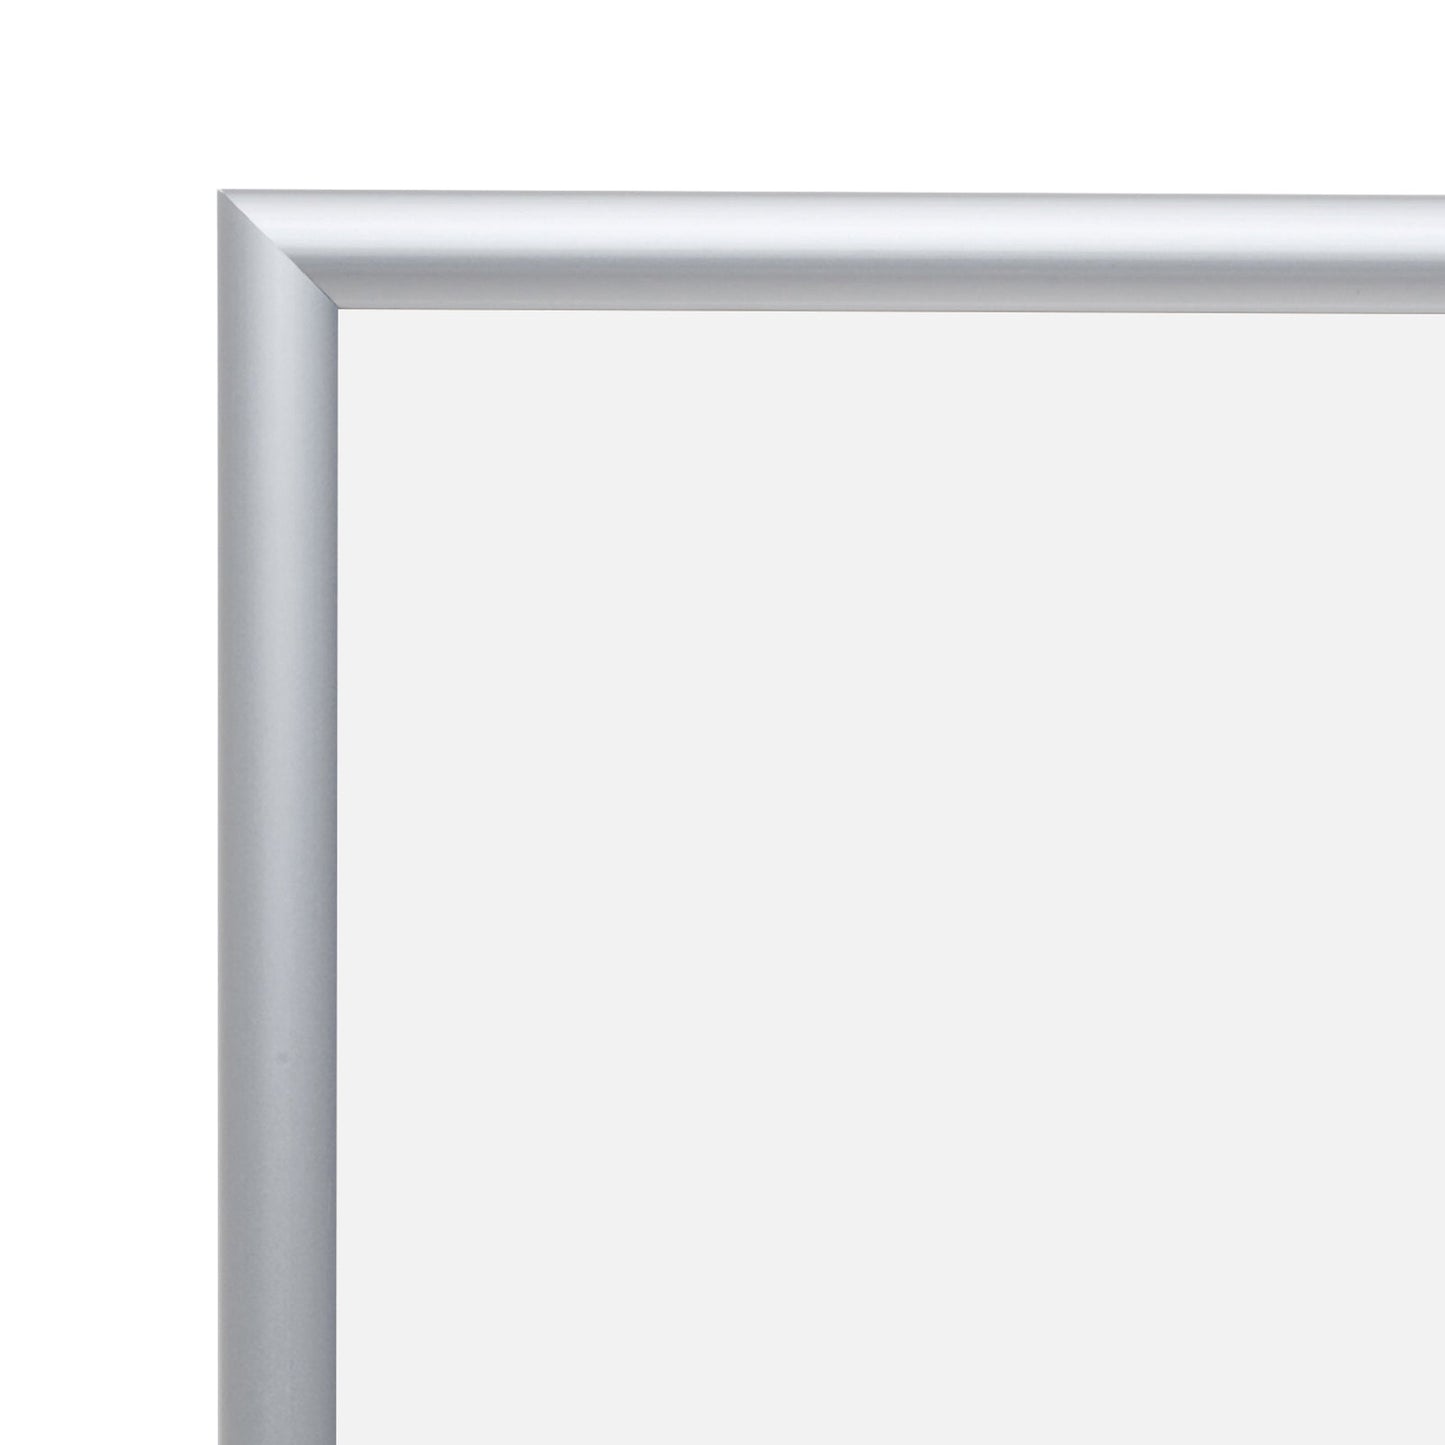 22x28 Silver SnapeZo® Snap Frame - 1" Profile